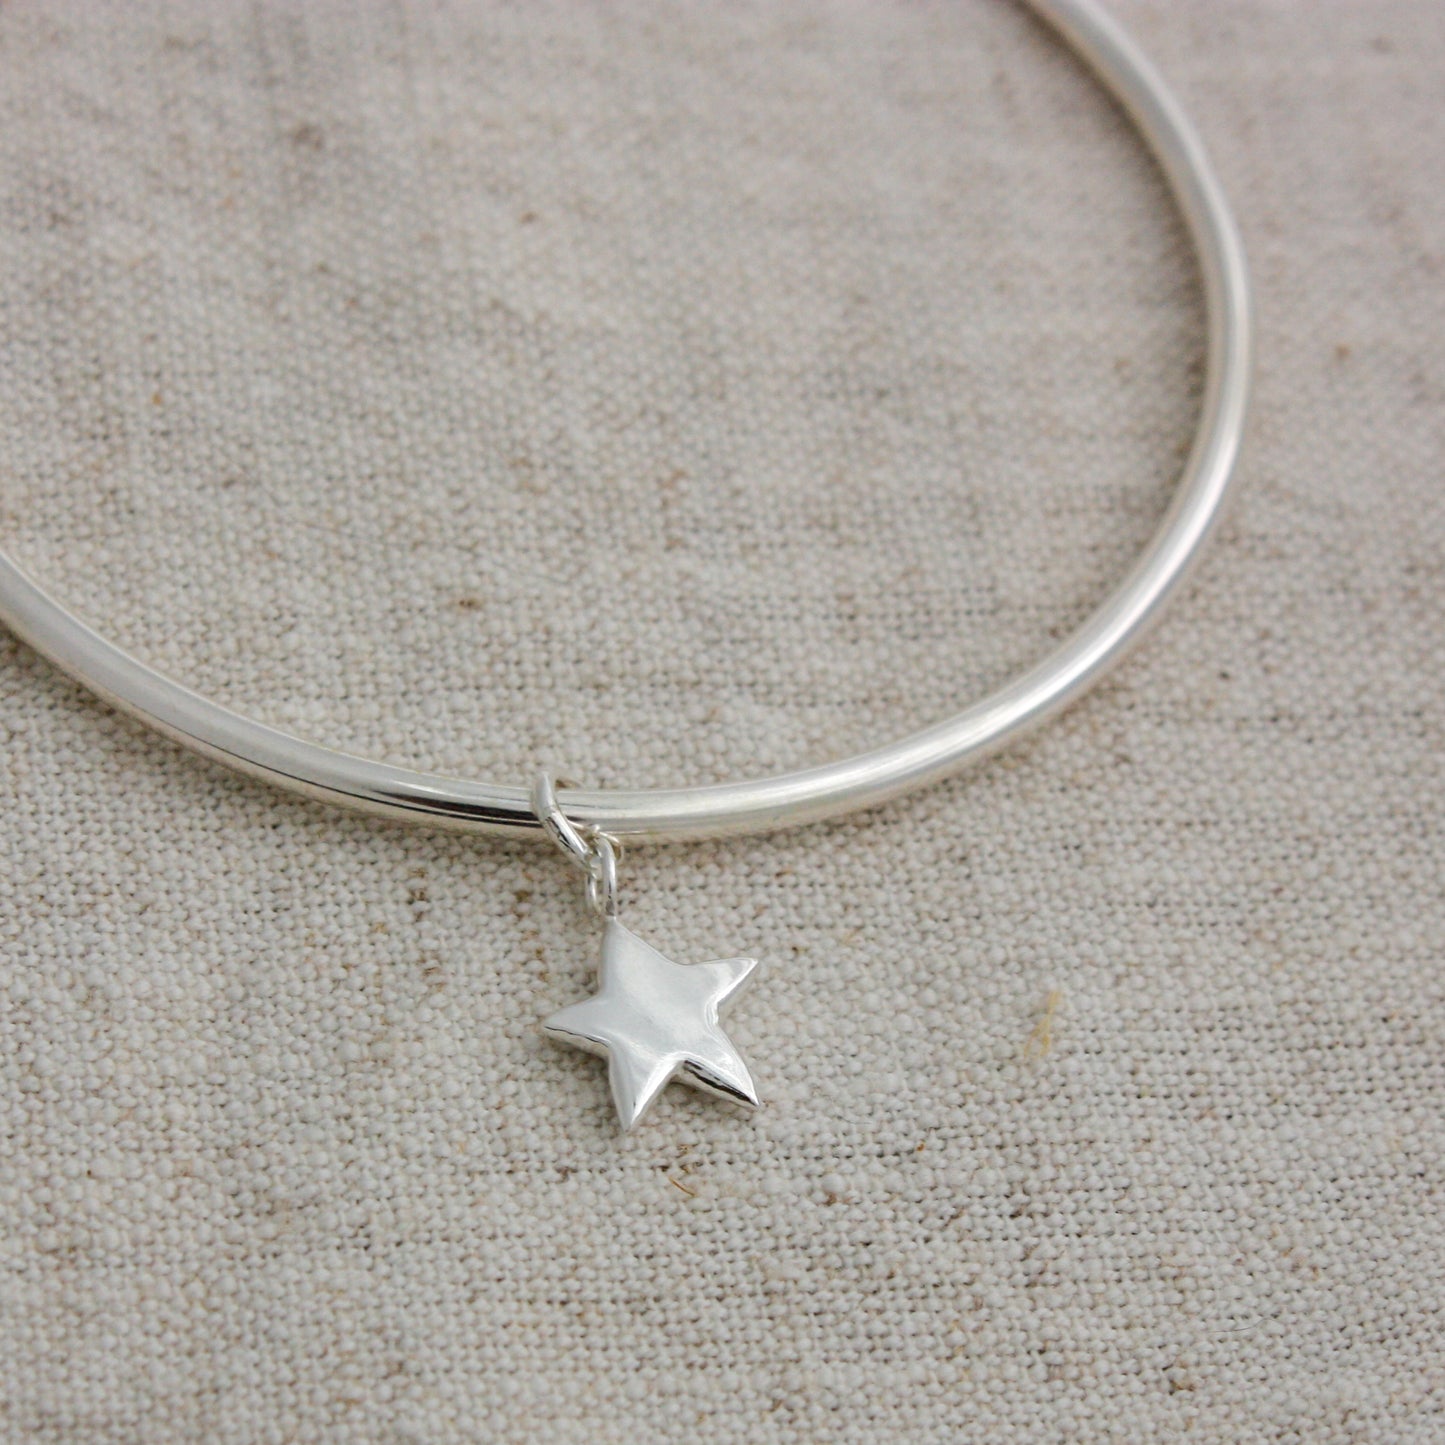 AYYUFE Stylish Party Bracelet Flower Five-pointed Star Jewelry Gifts Bright  Luster - Walmart.com